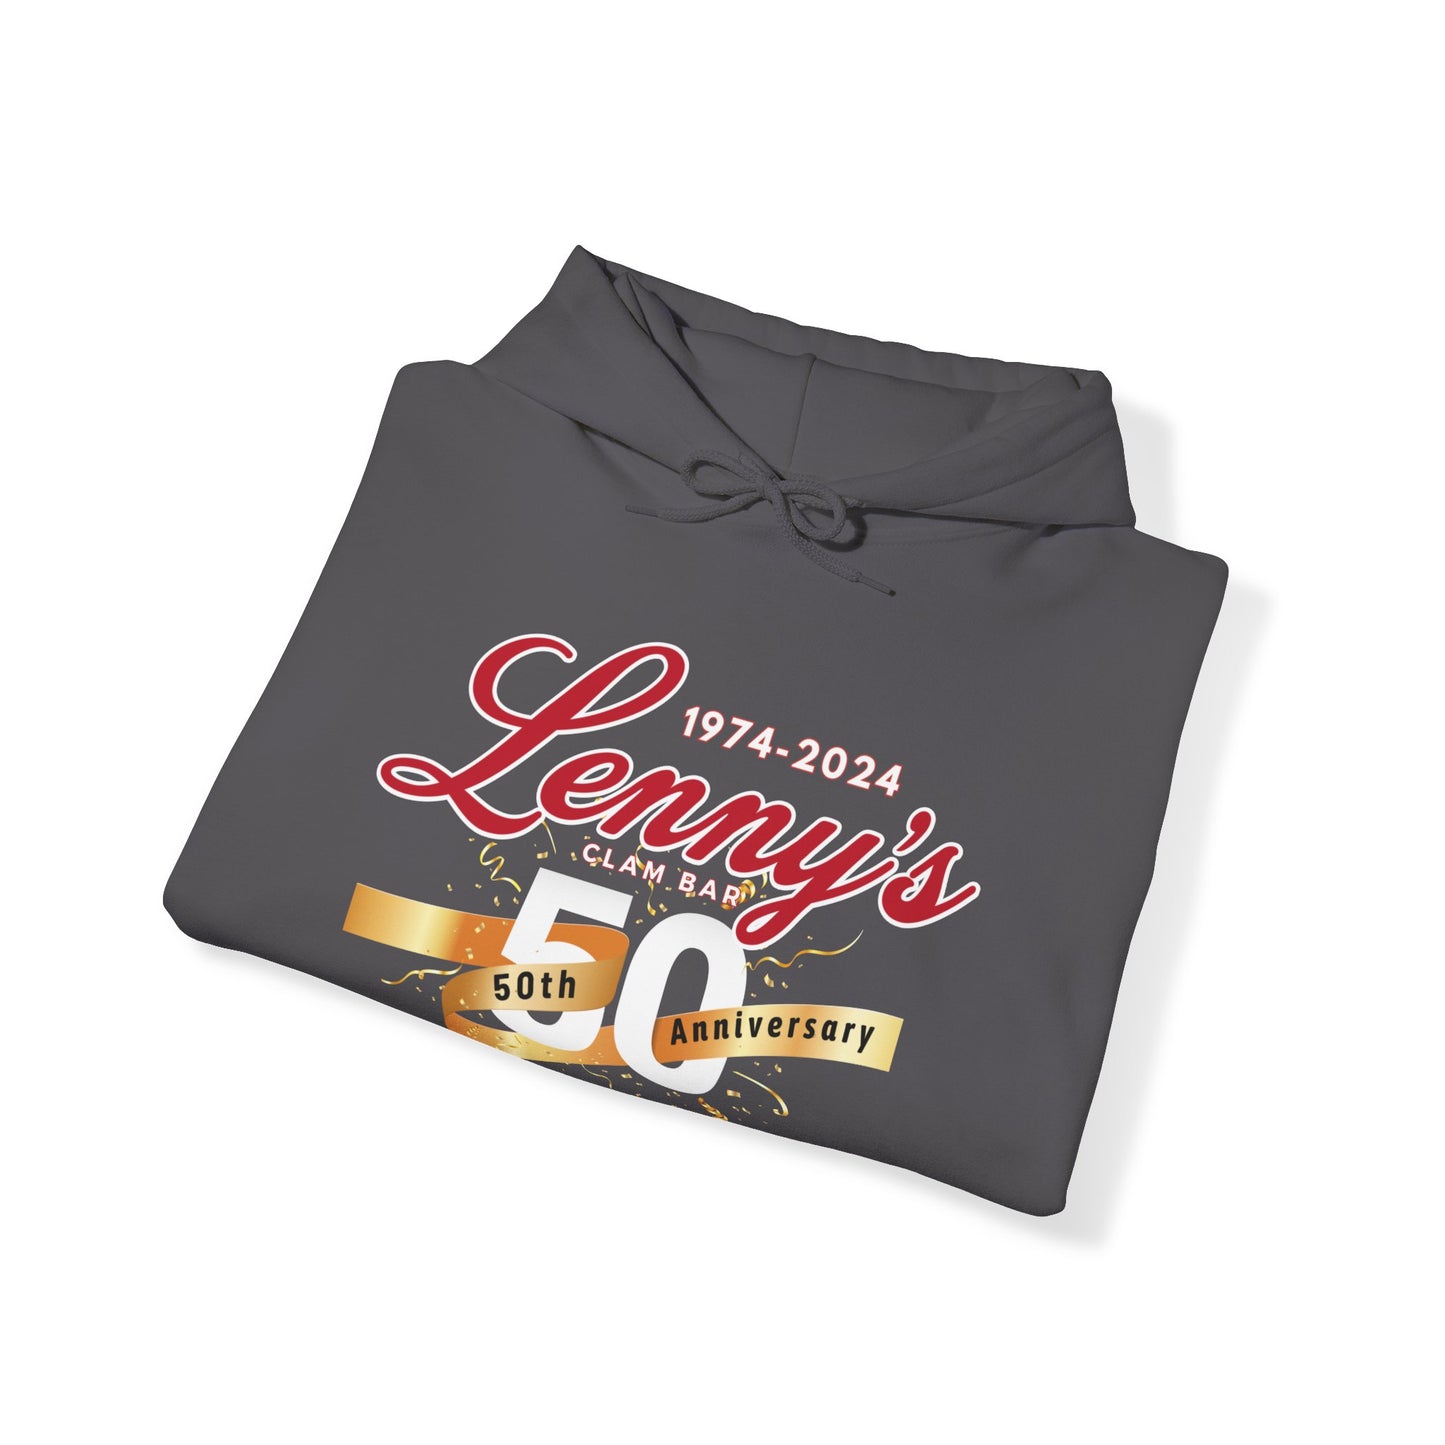 Lenny's 50th Anniversary Commemorative Heavy Blend™ Hooded Sweatshirt